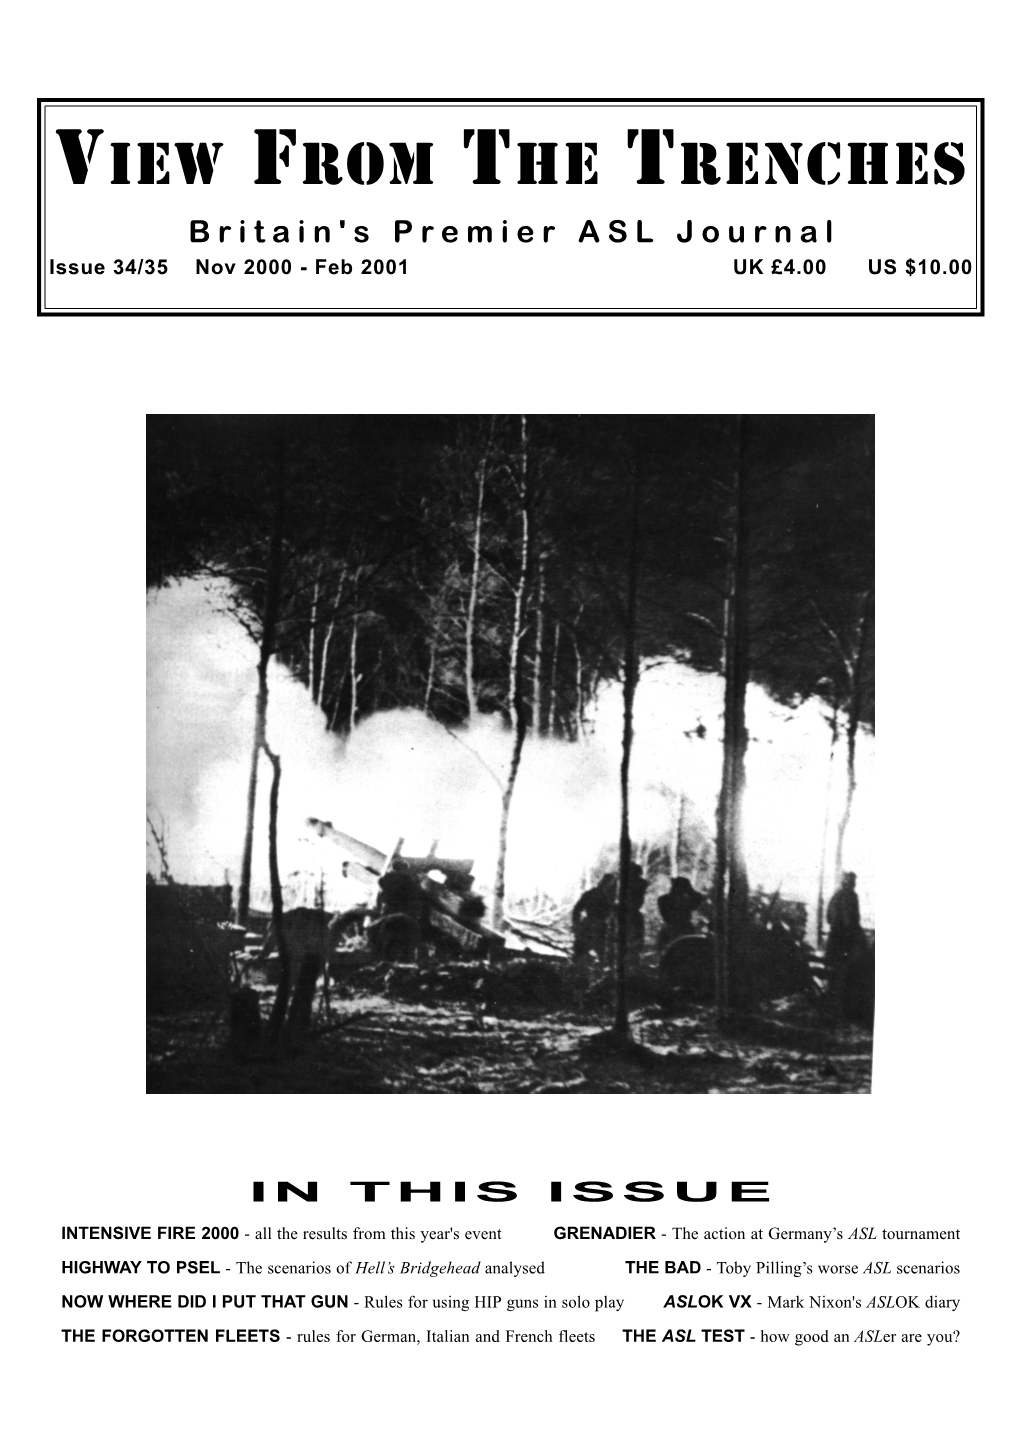 Britain's Premier ASL Journal Issue 34/35 Nov 2000 - Feb 2001 UK £4.00 US $10.00